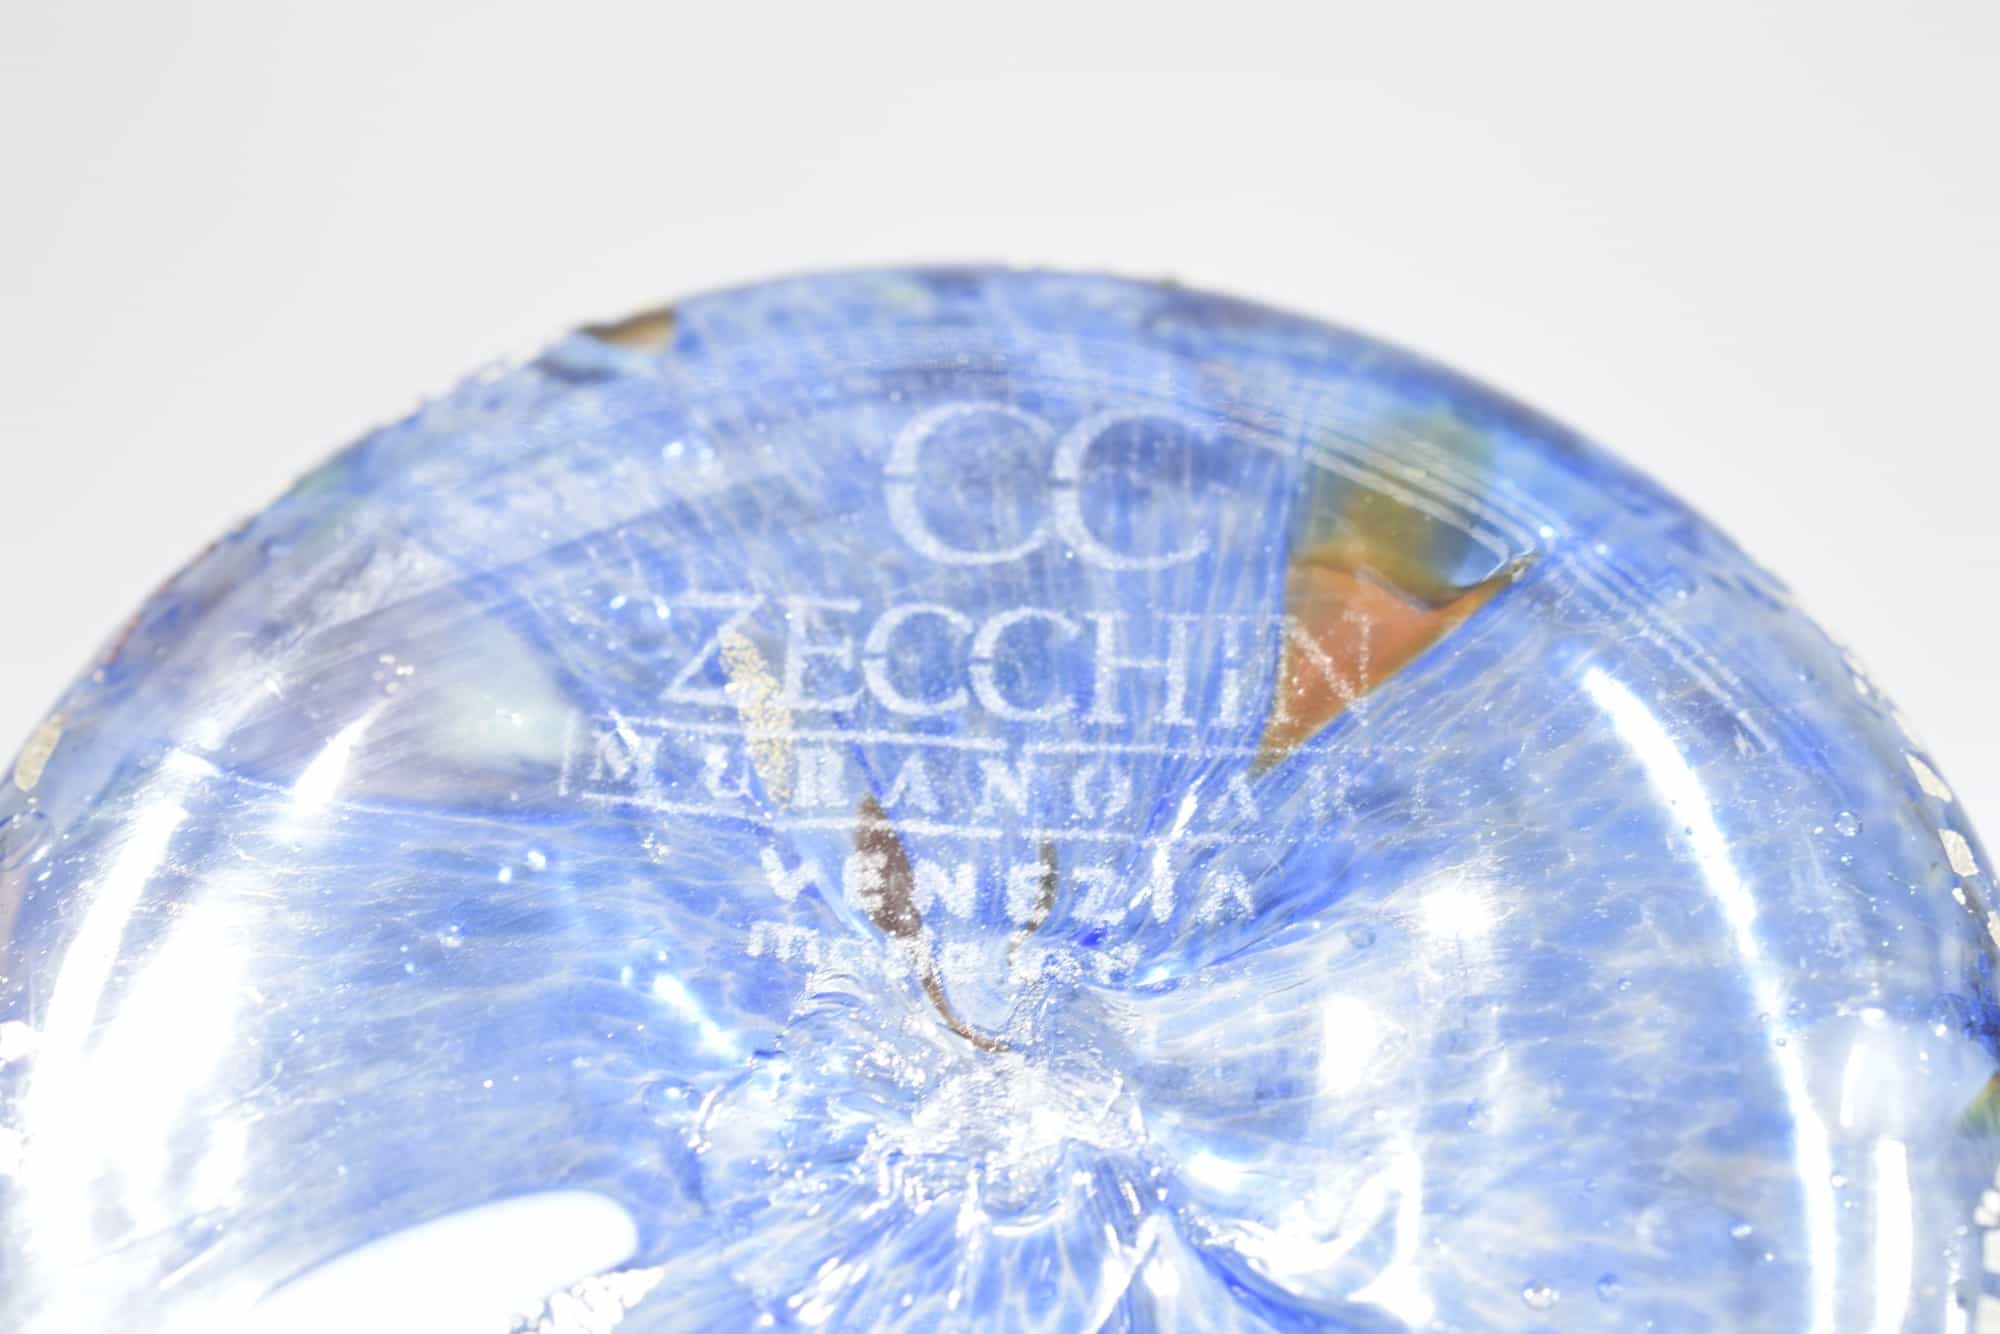 Arlecchino-Glas aus Muranoglas - (Art. 11304)